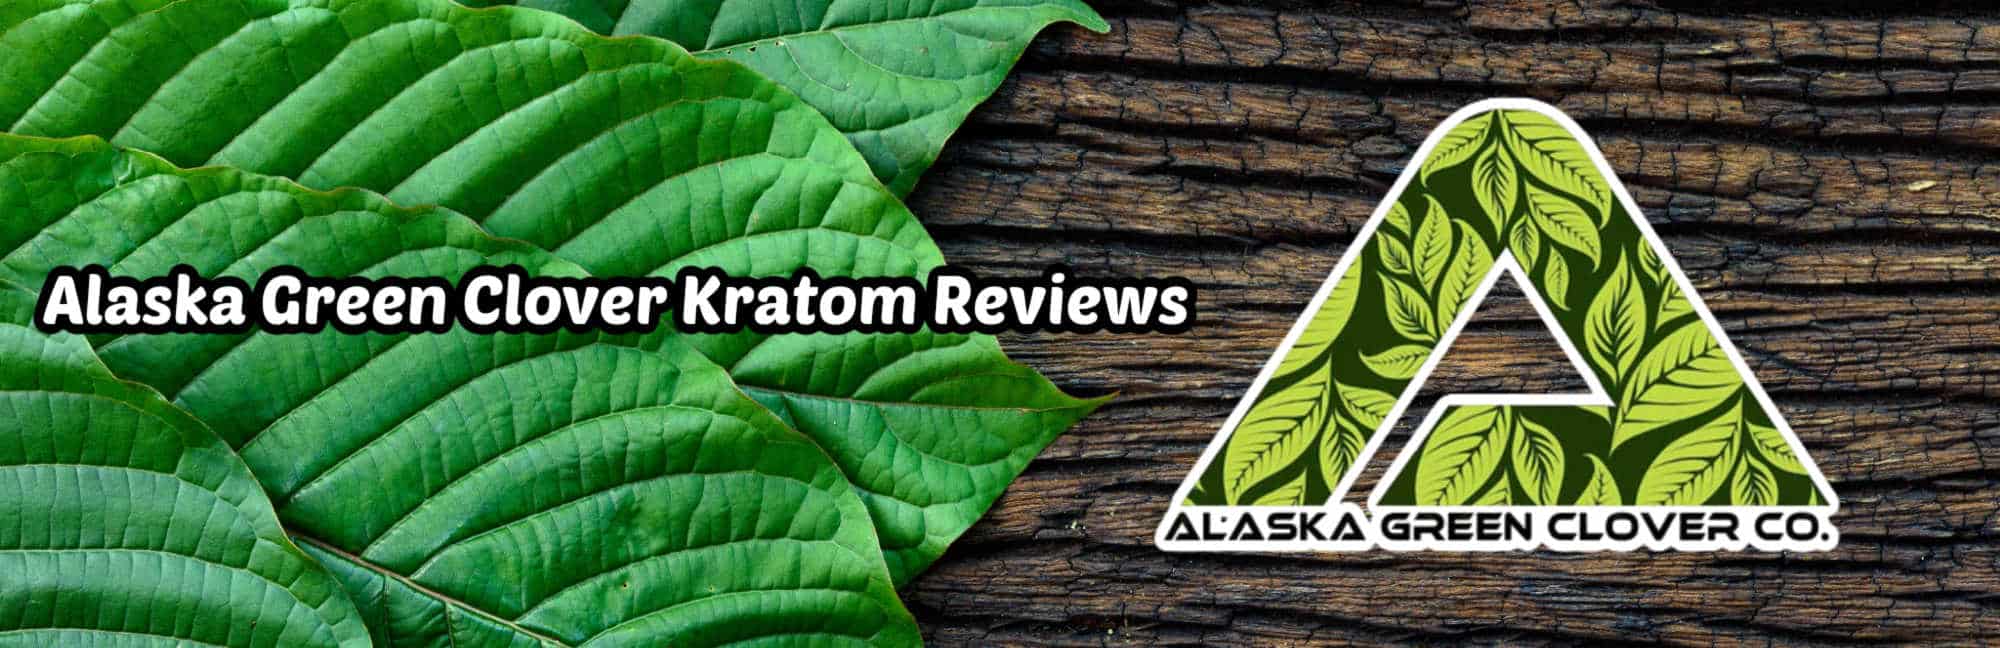 image of alaska green clover kratom review